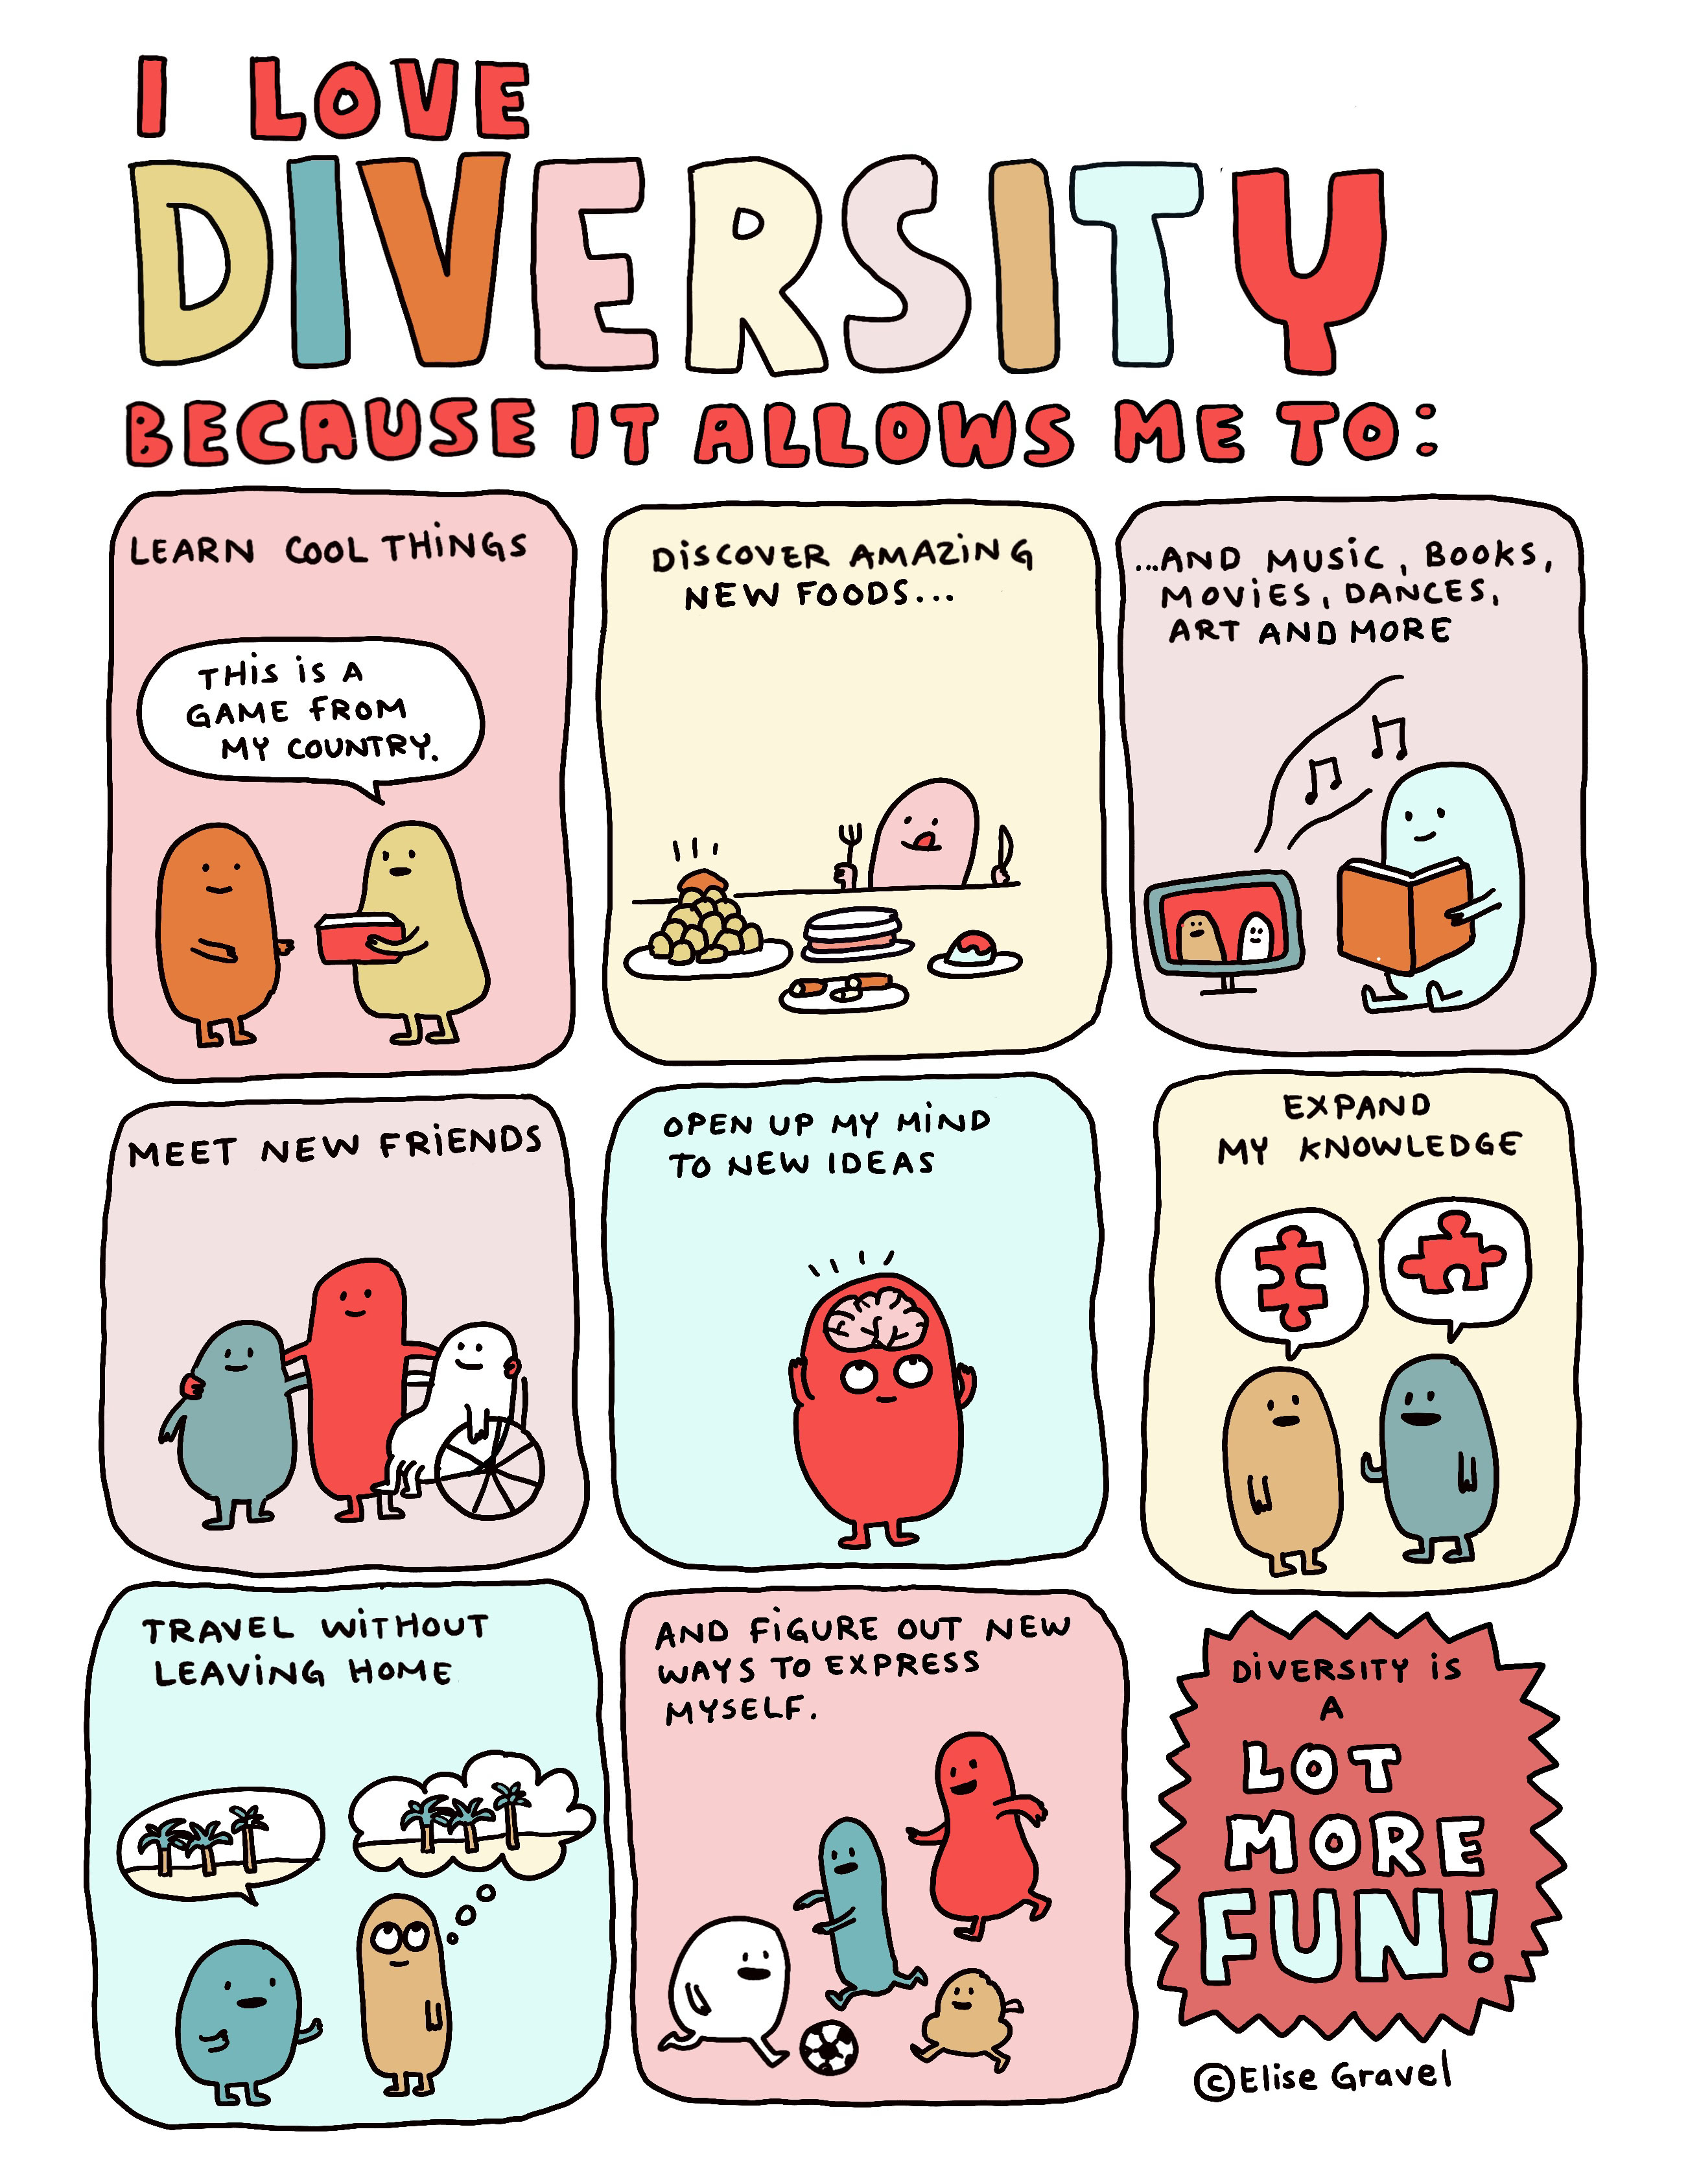 I love diversity